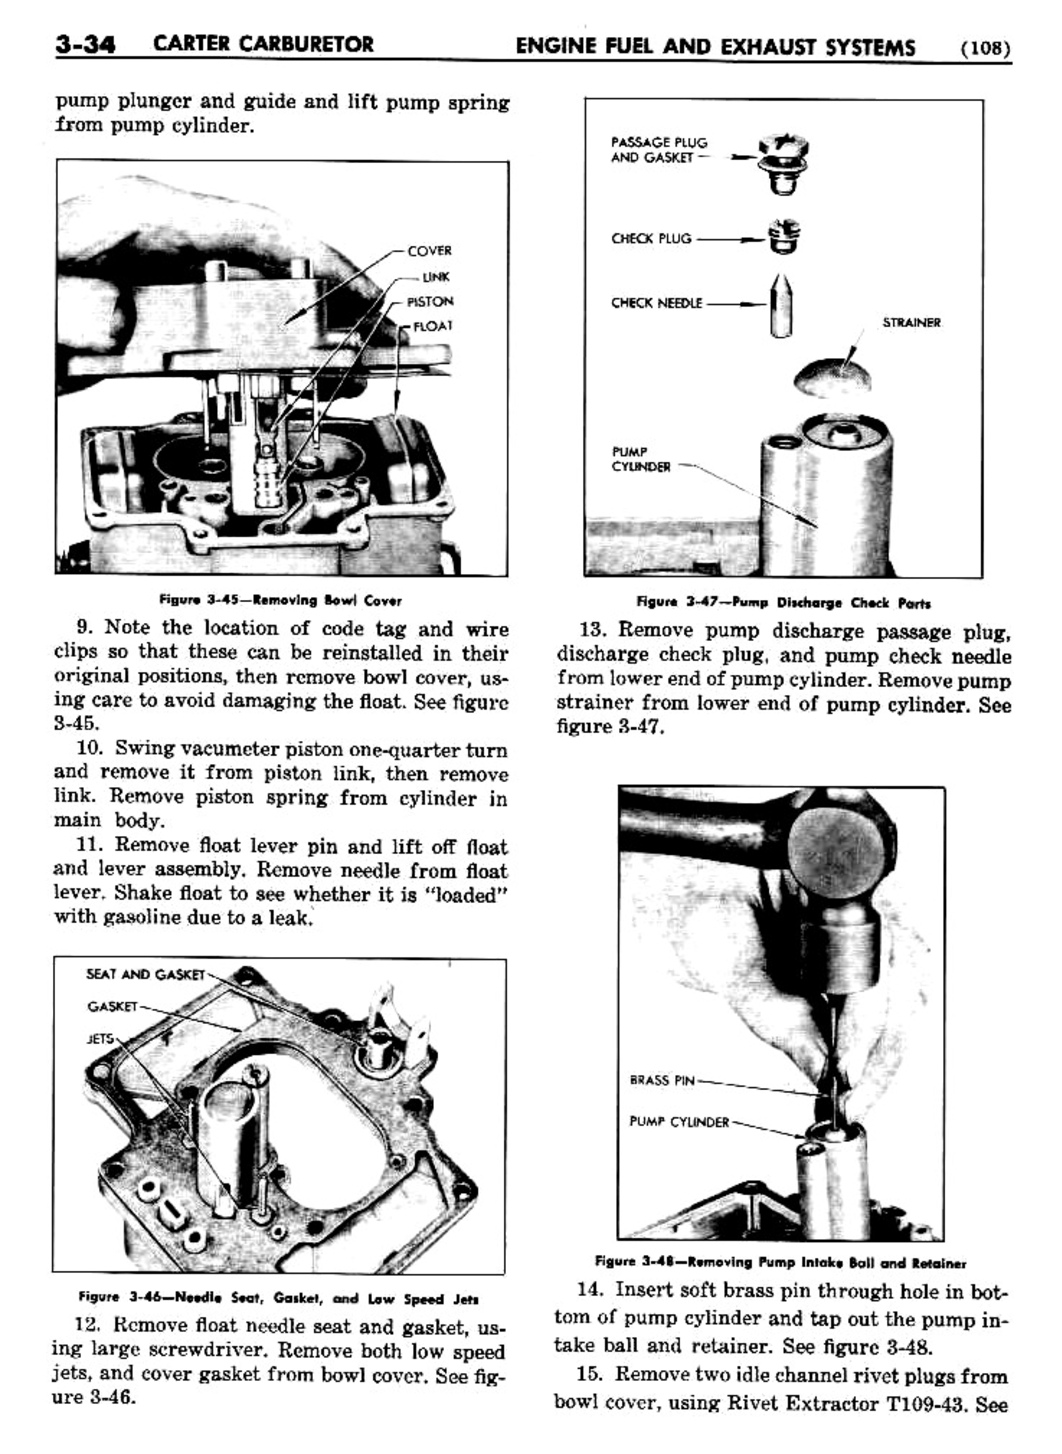 n_04 1948 Buick Shop Manual - Engine Fuel & Exhaust-034-034.jpg